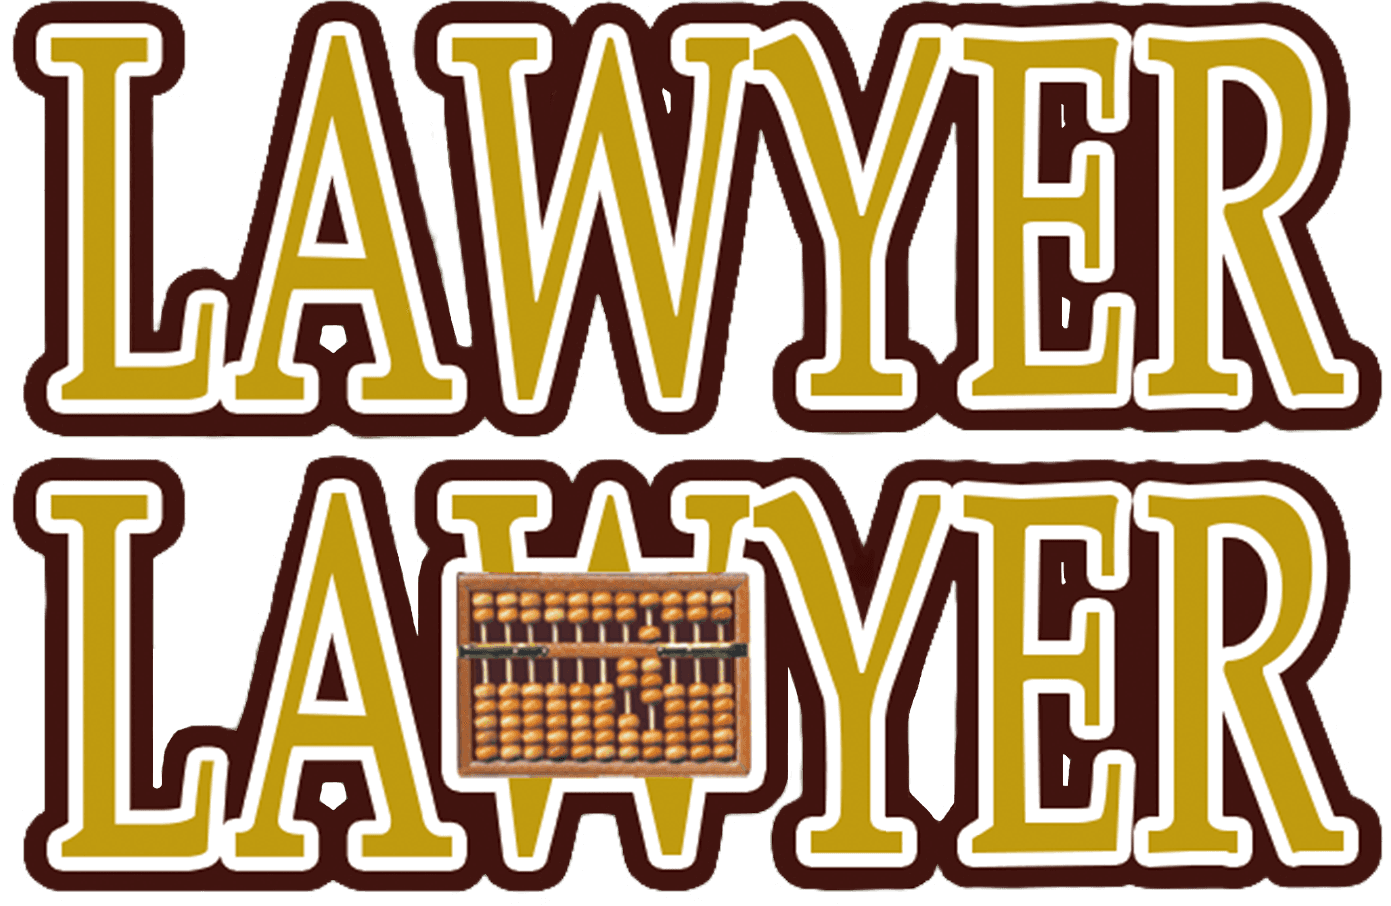 Lawyer Lawyer logo